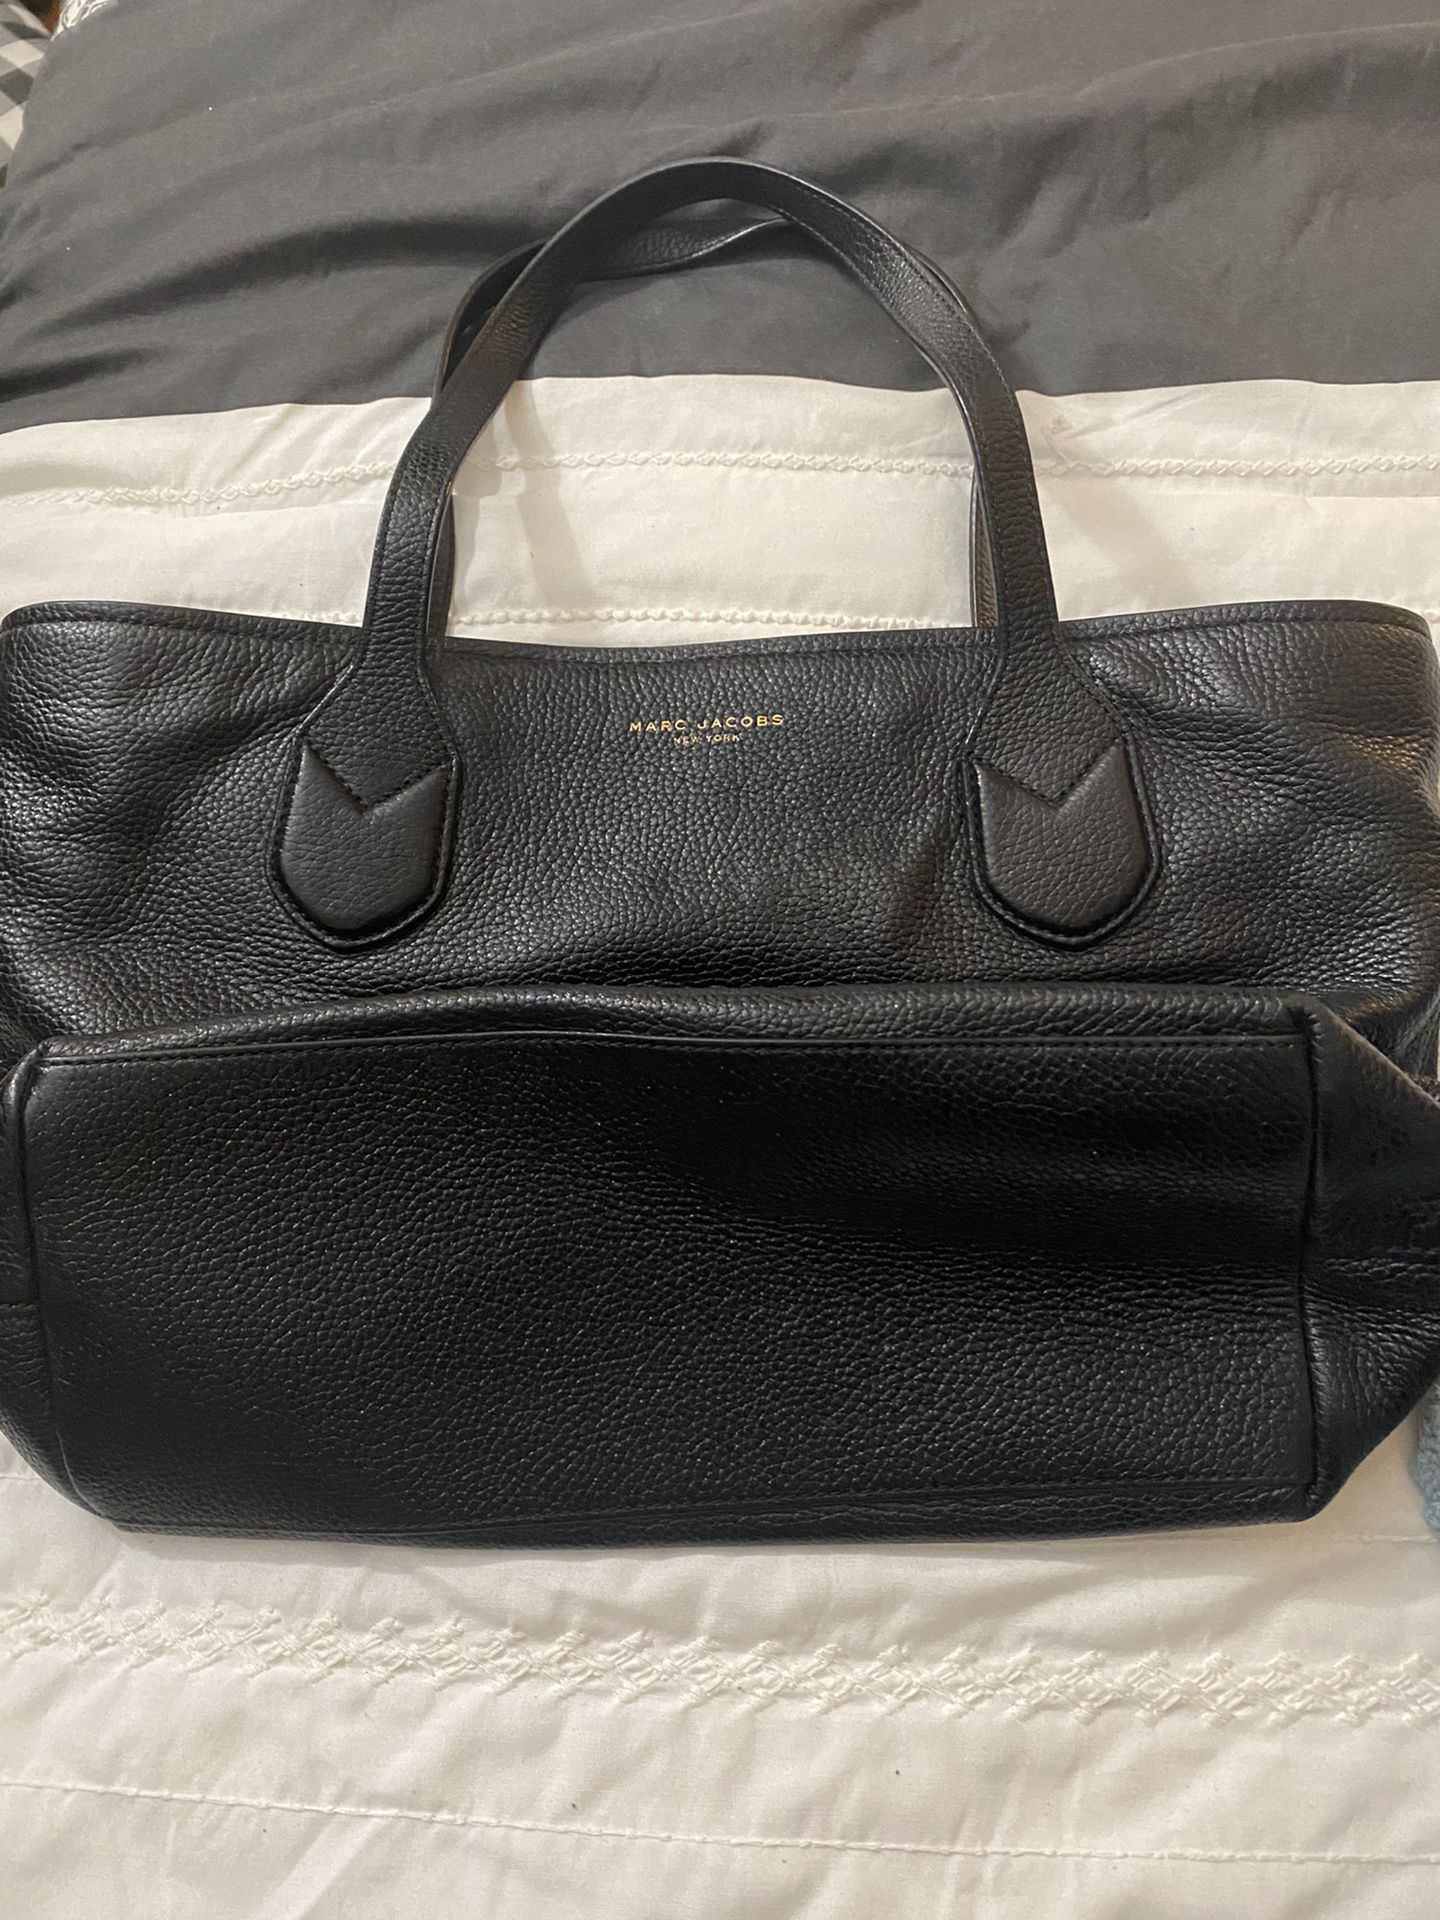 Marc Jacobs Black Handbag 